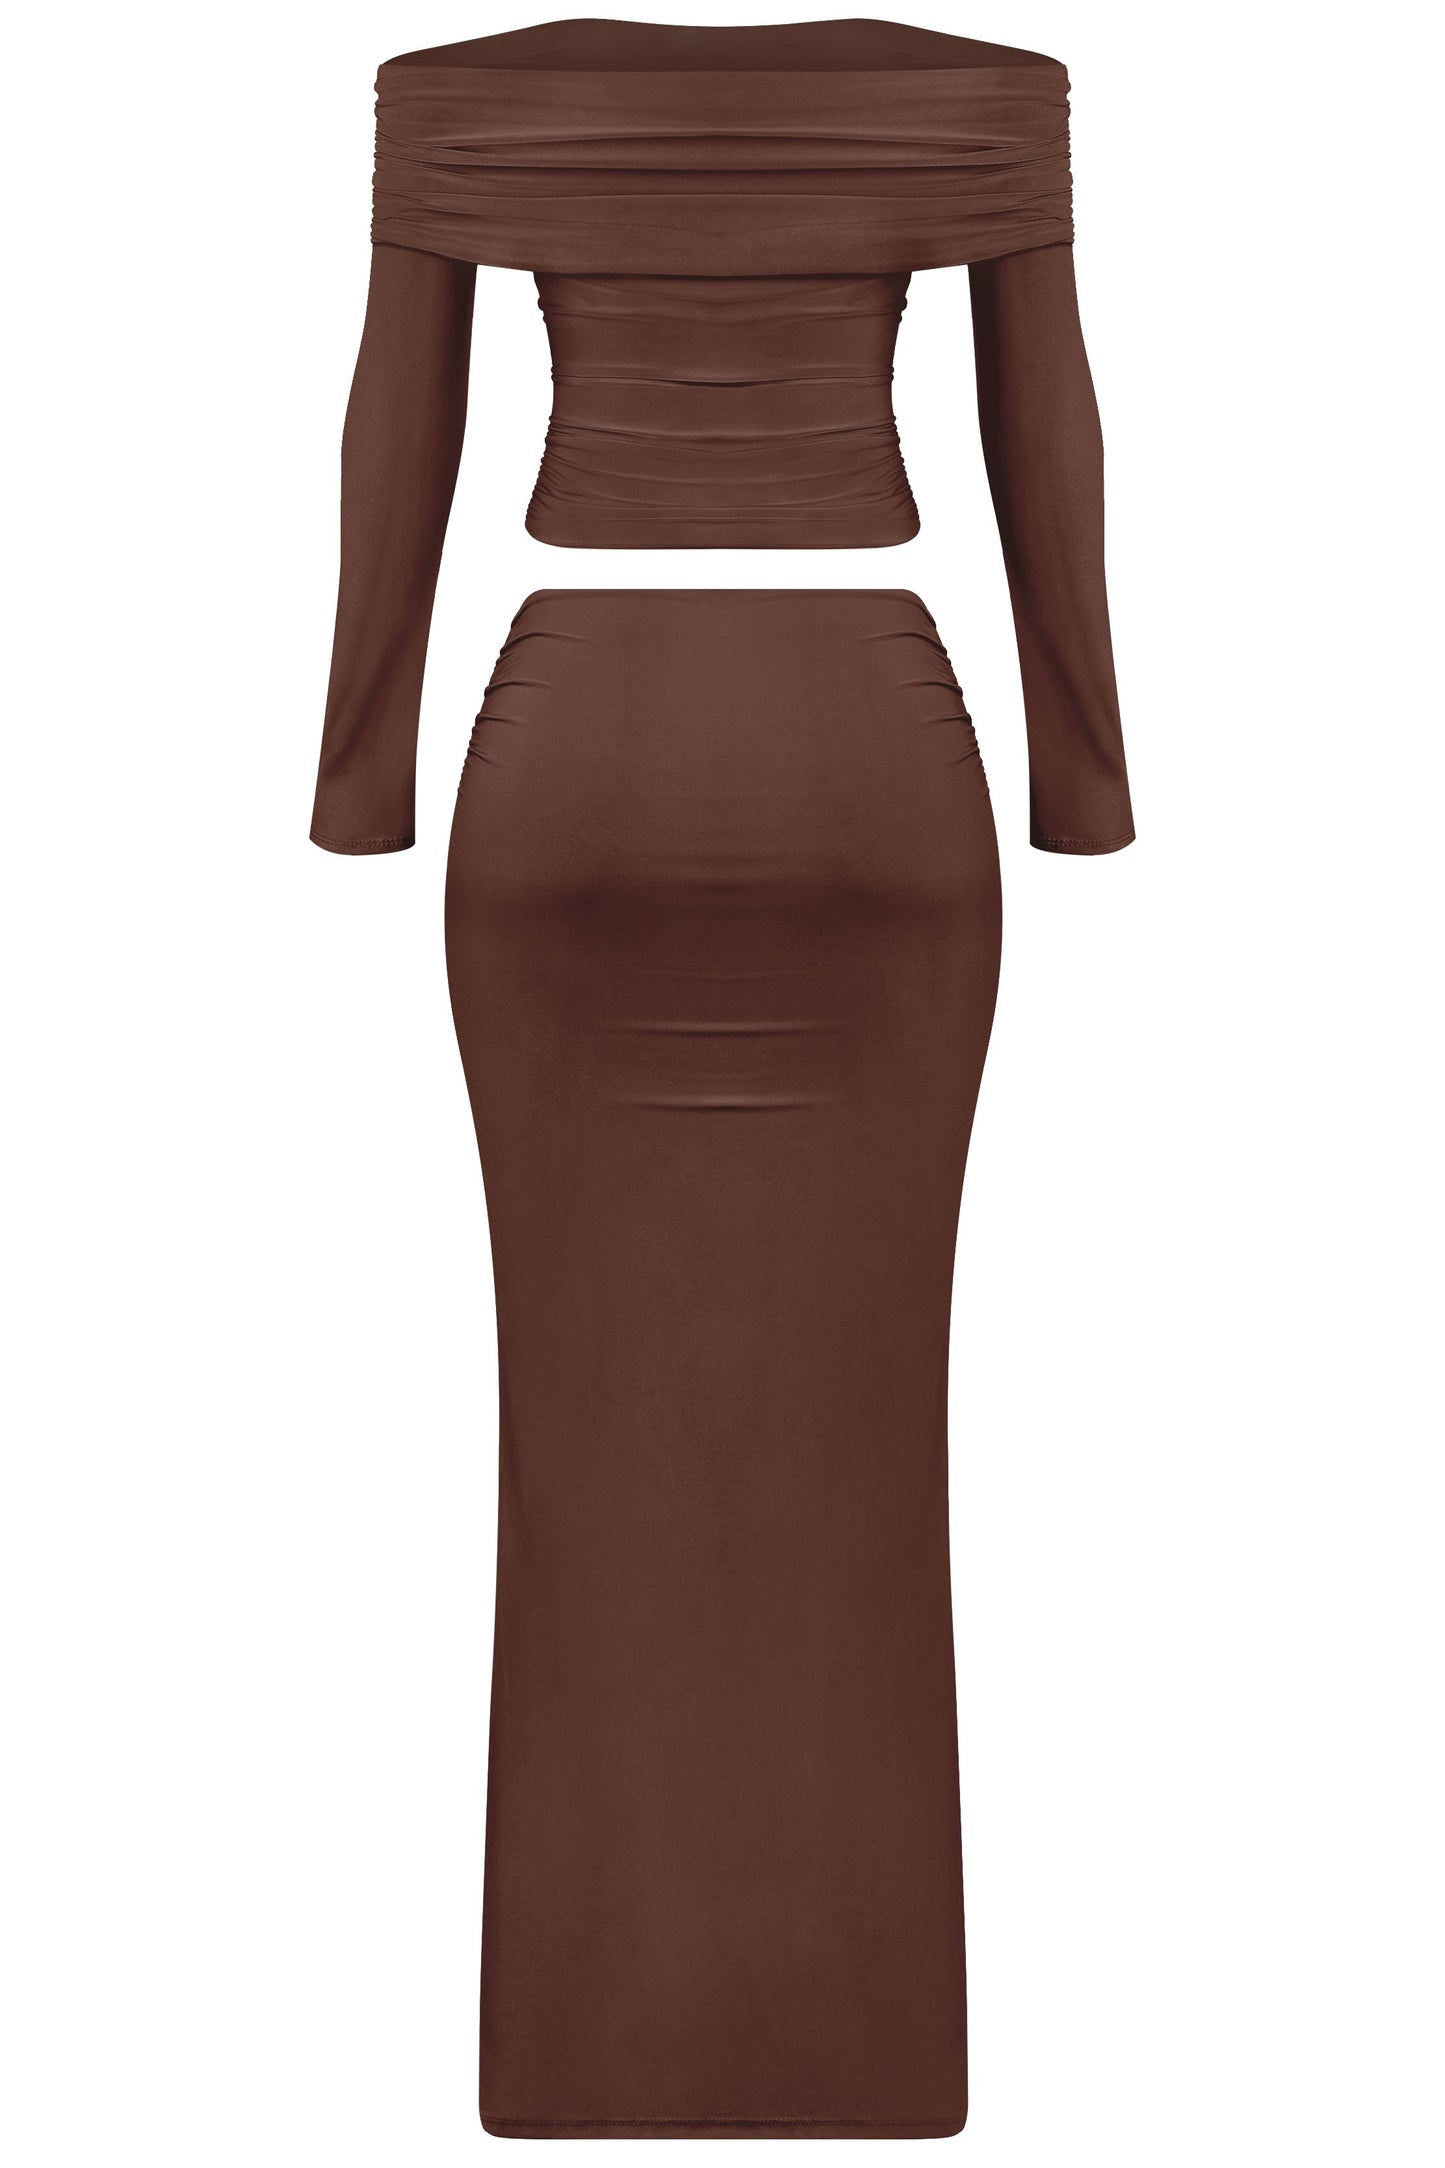 OTS Slinky Top + Maxi Skirt Set Brown